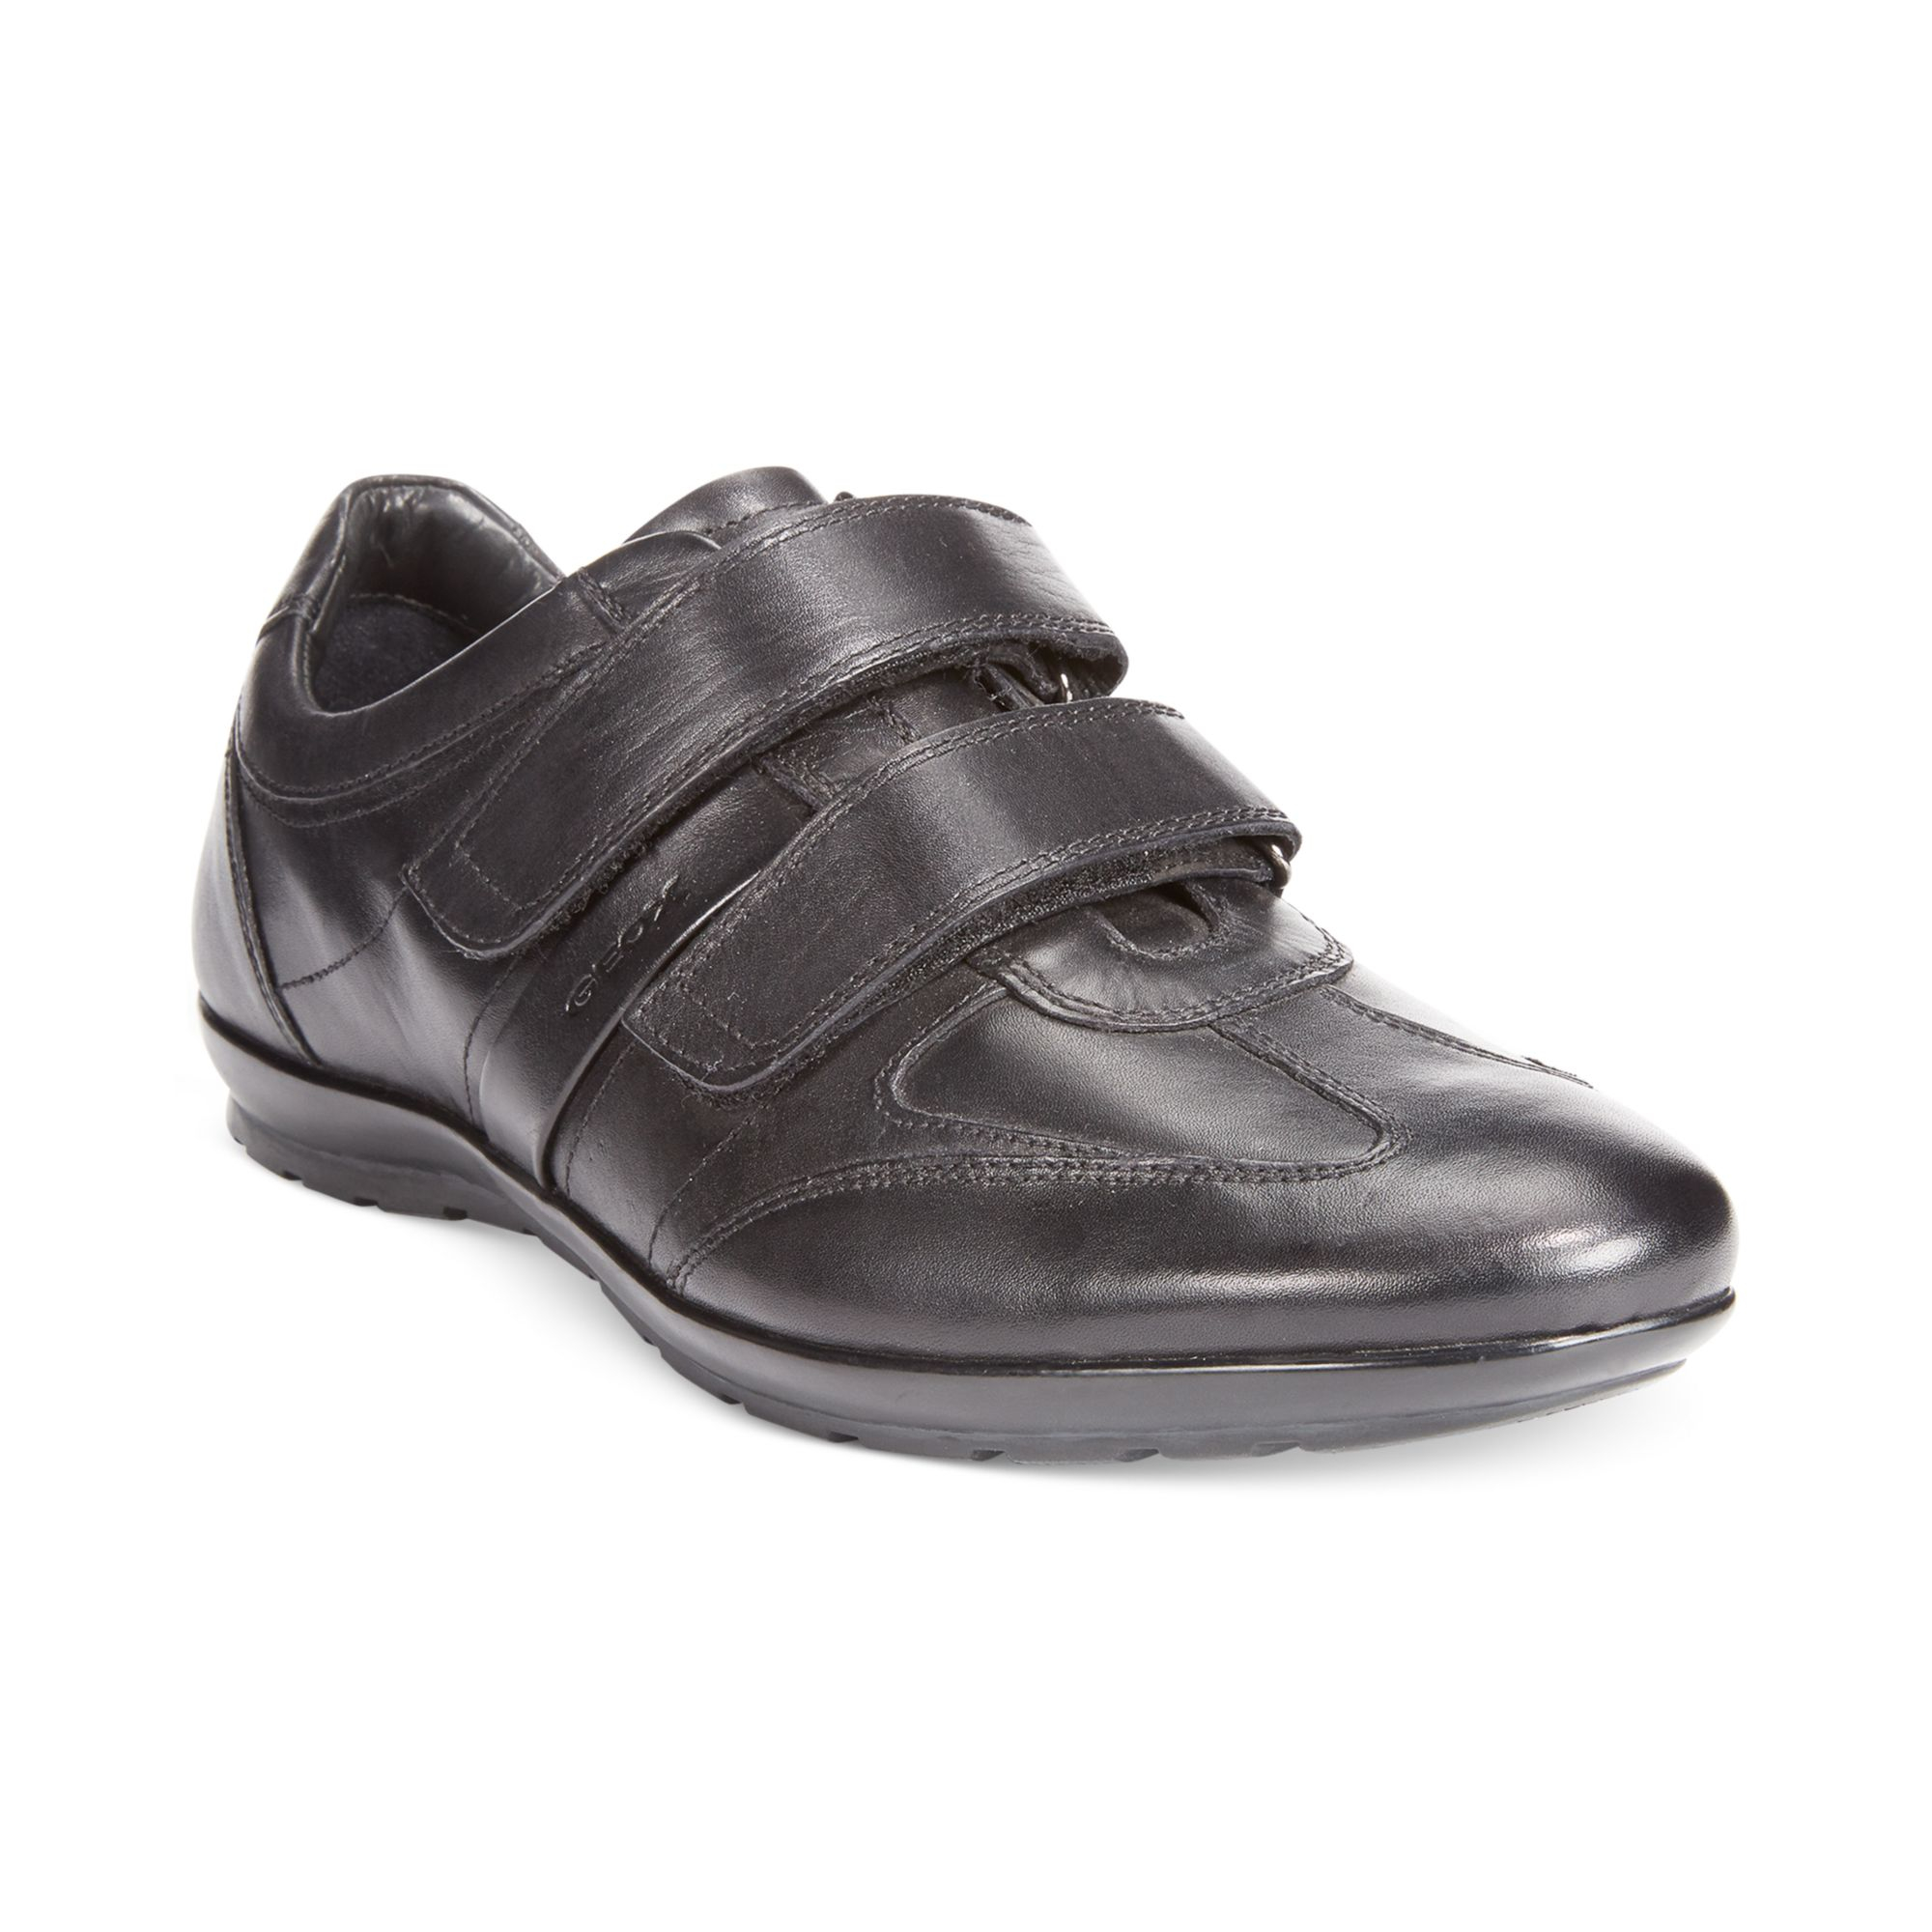 Lyst - Geox Symbol Velcro Sneakers in Black for Men